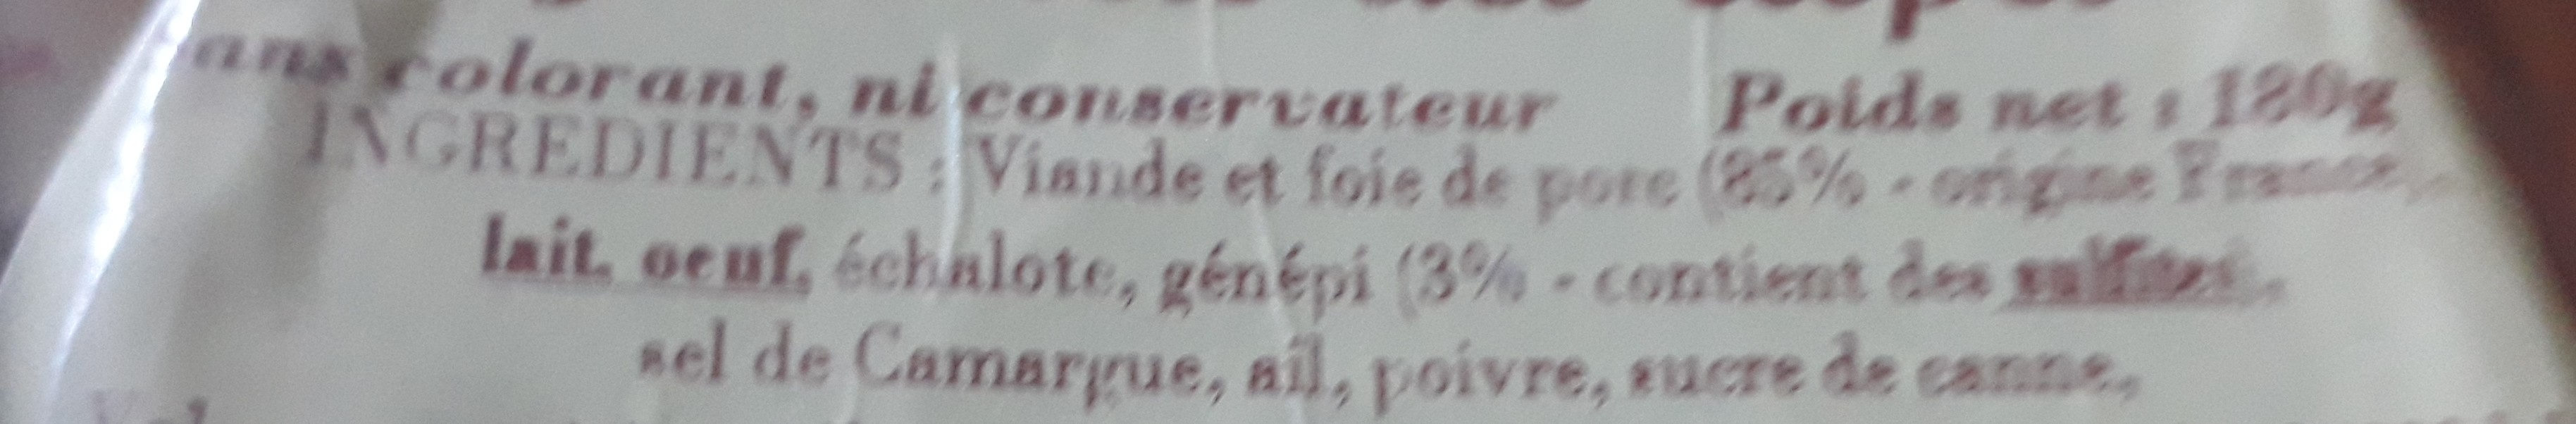 Terrine au Génépi - Ingredients - fr